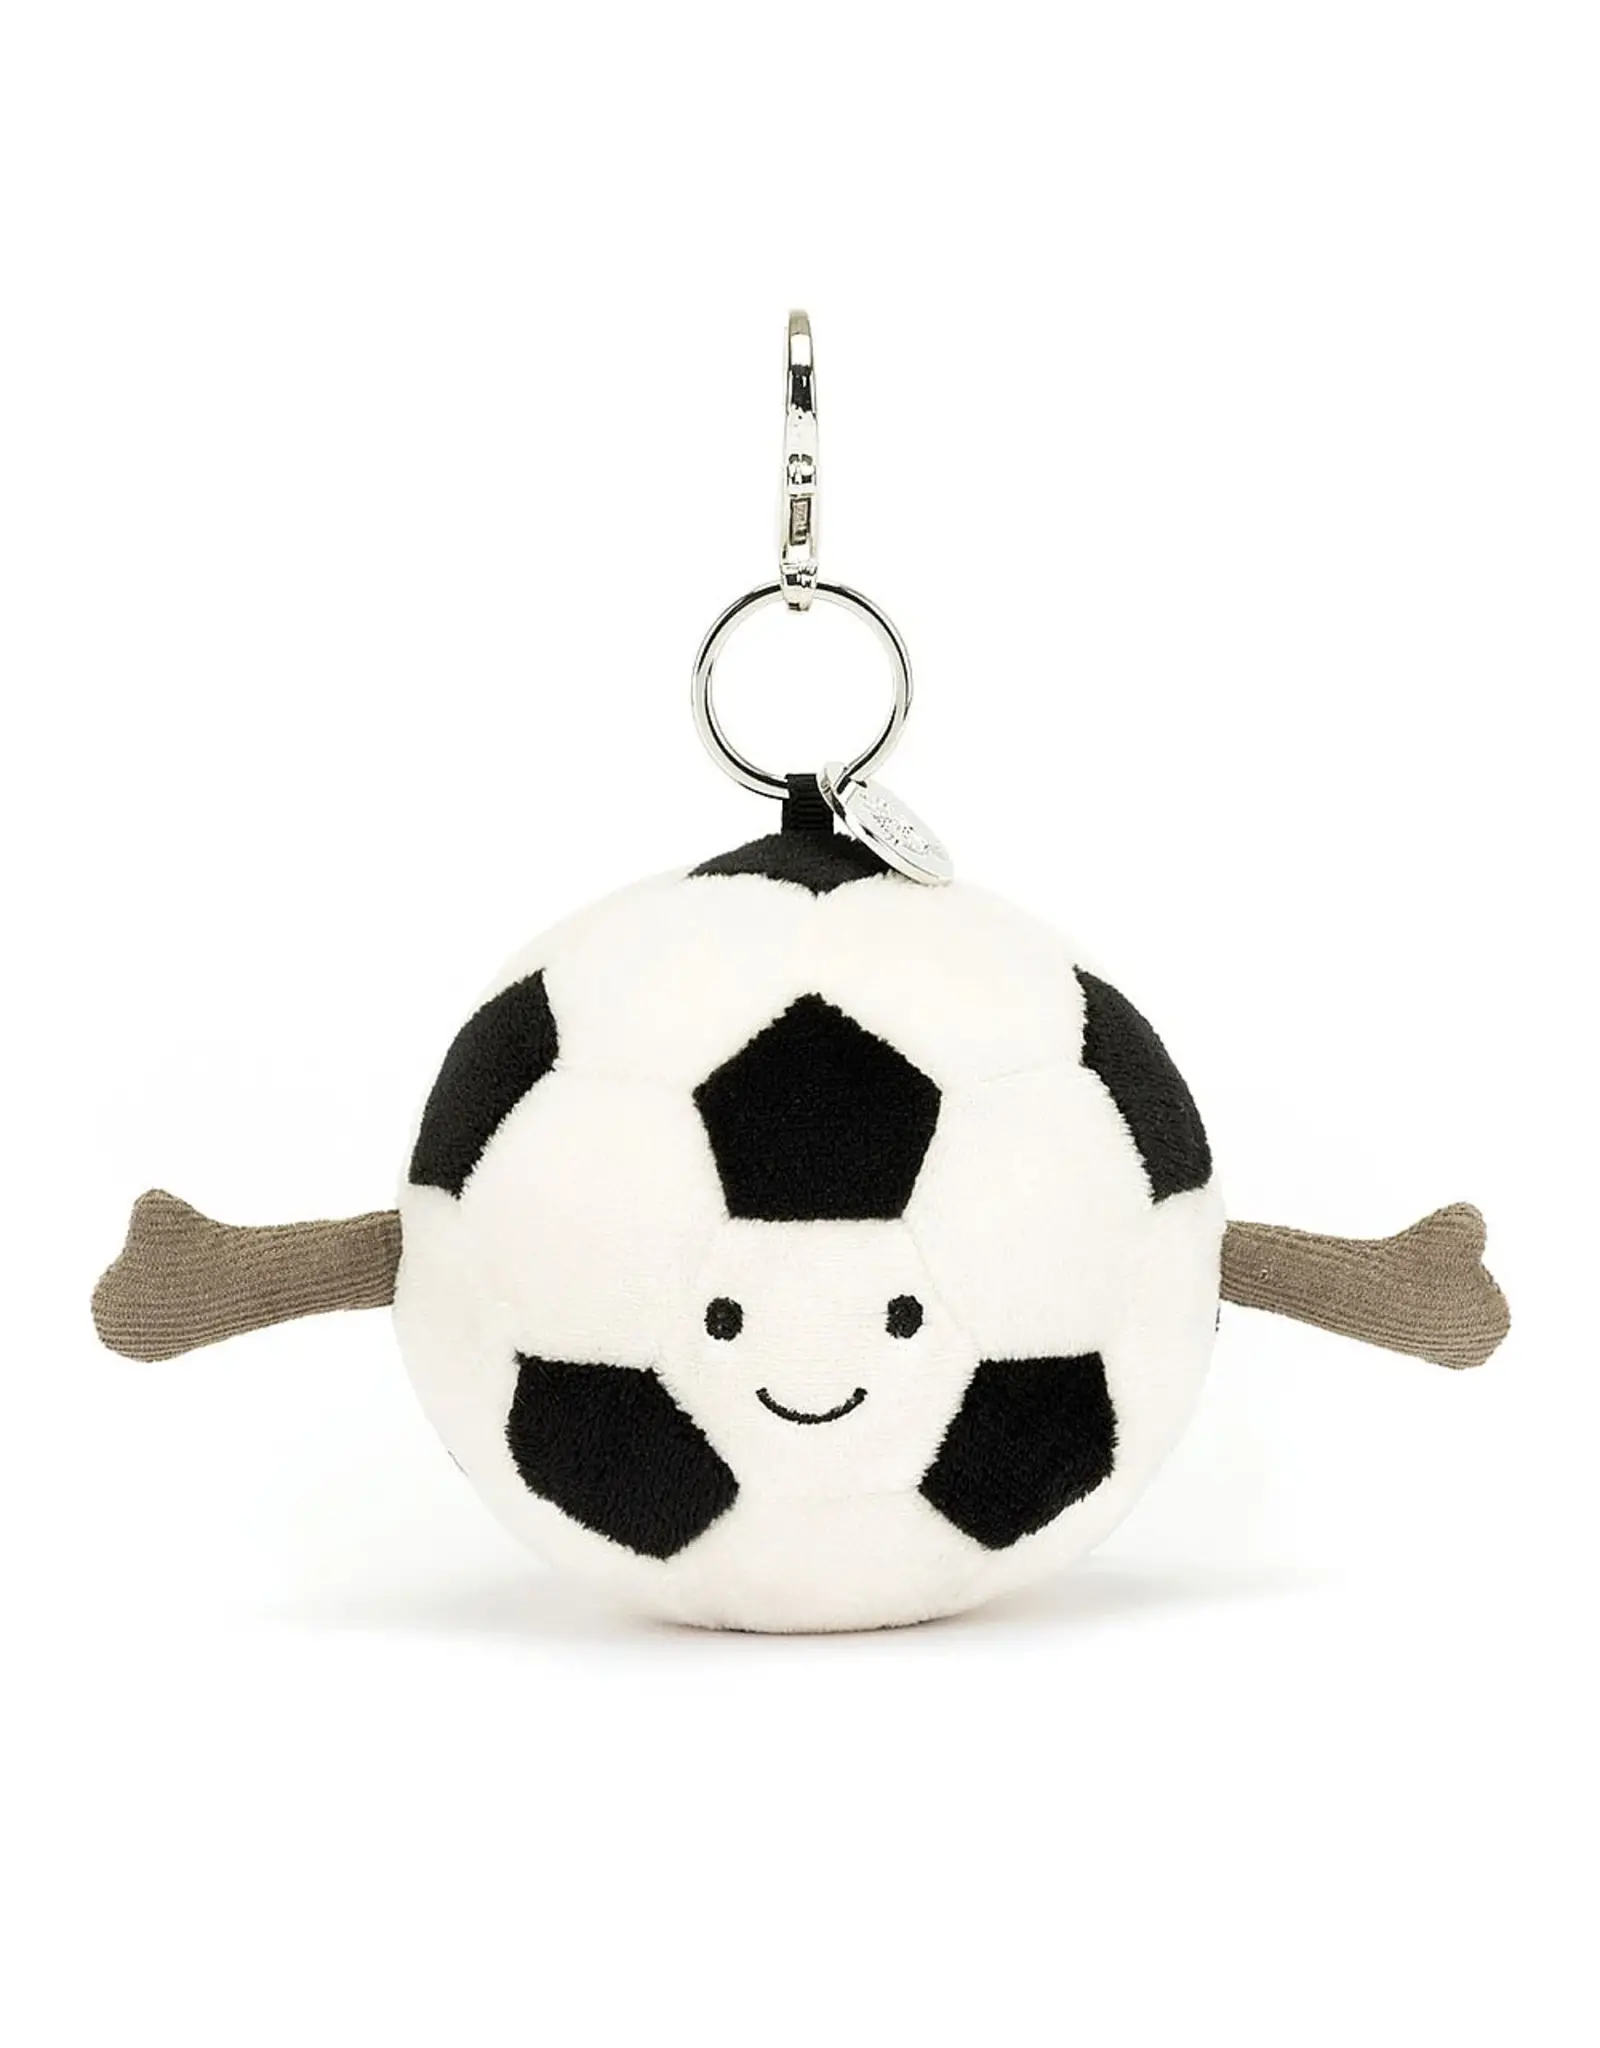 Jellycat Amuseables Sports Soccer Bag Charm